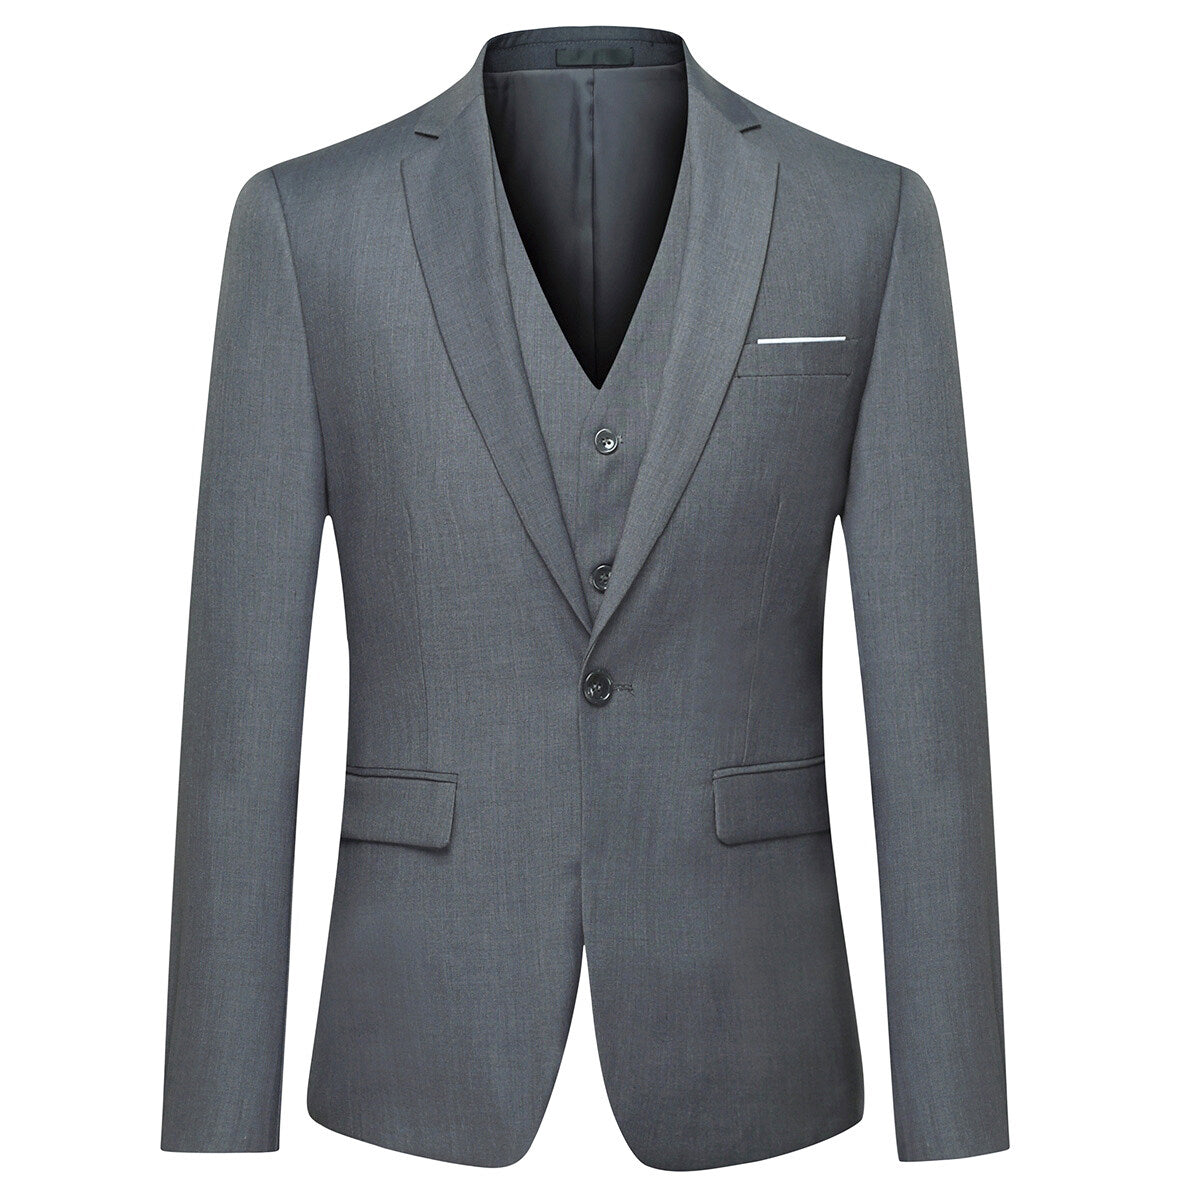 3-Piece One Button Formal Suit Dark Grey Suit